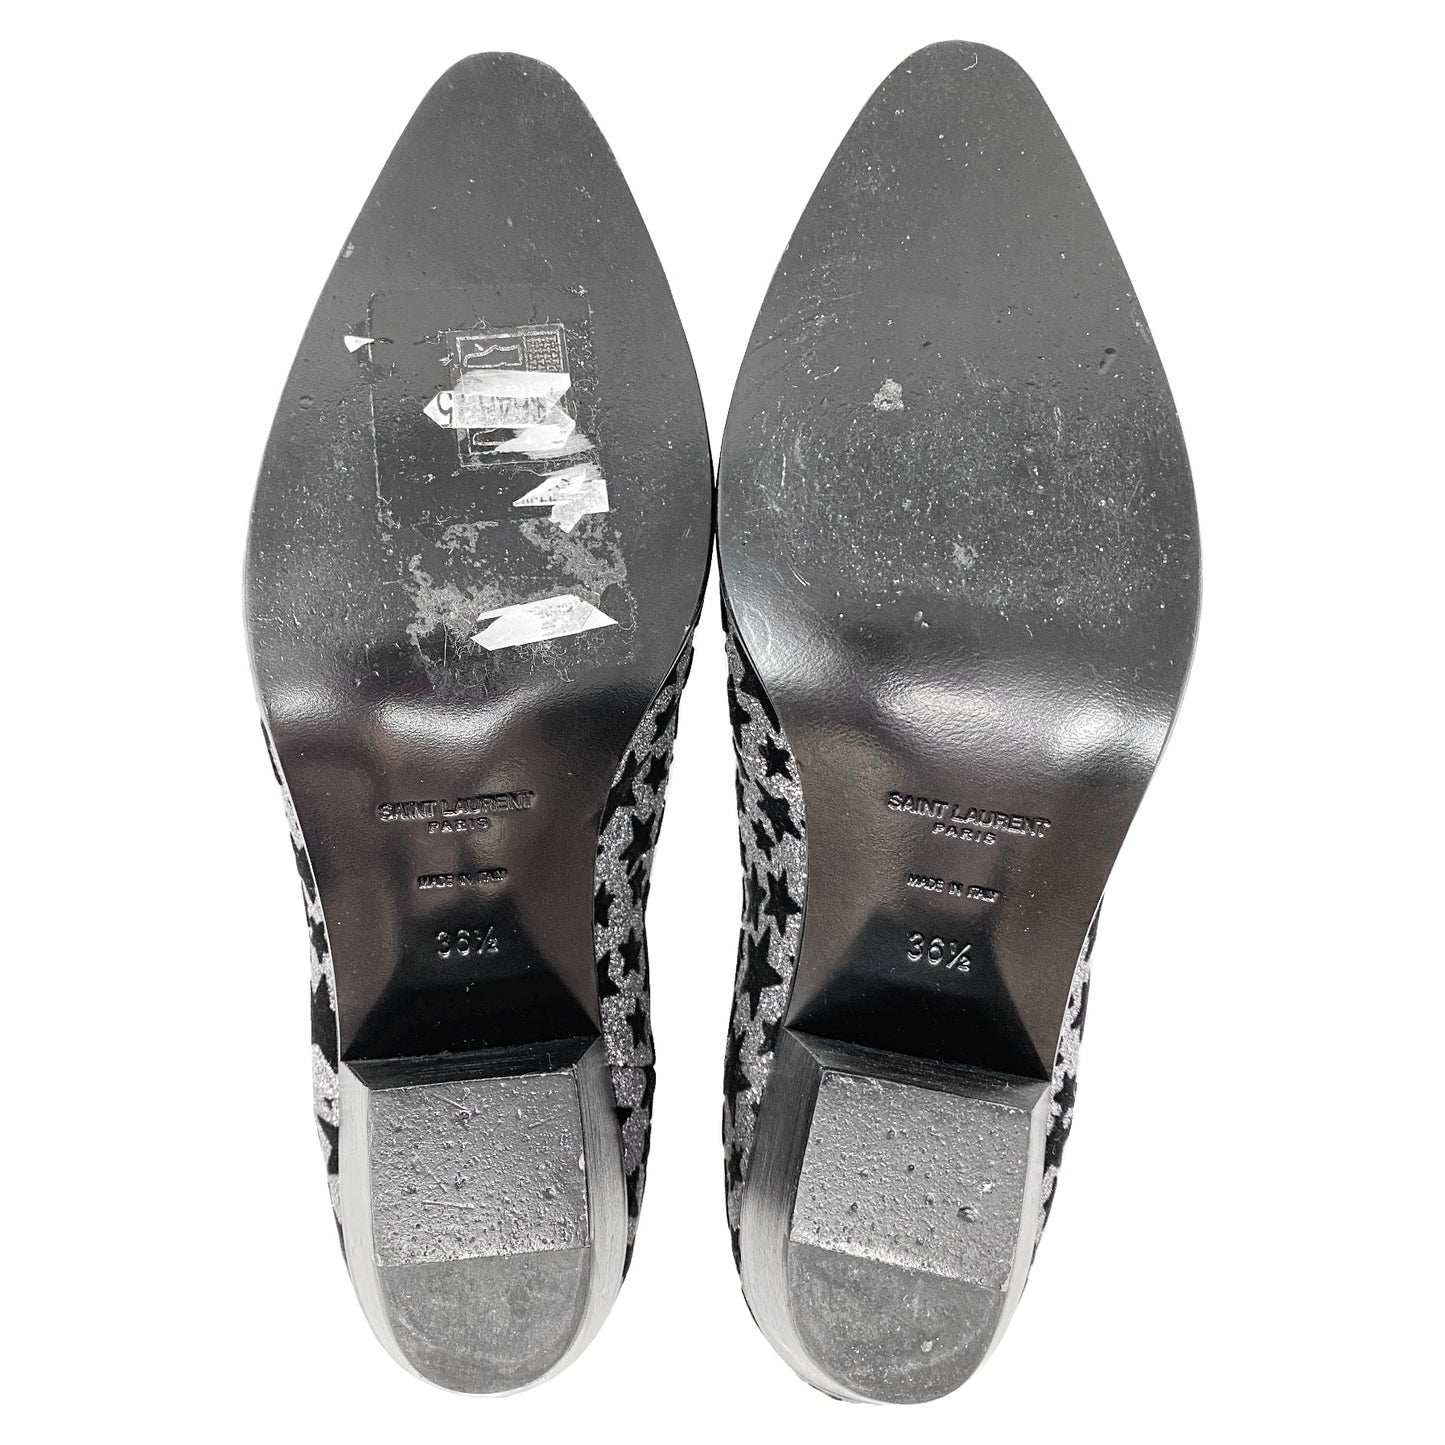 Saint Laurent Chelsea Rock Star 40 Glitter Boots Size EU 36.5